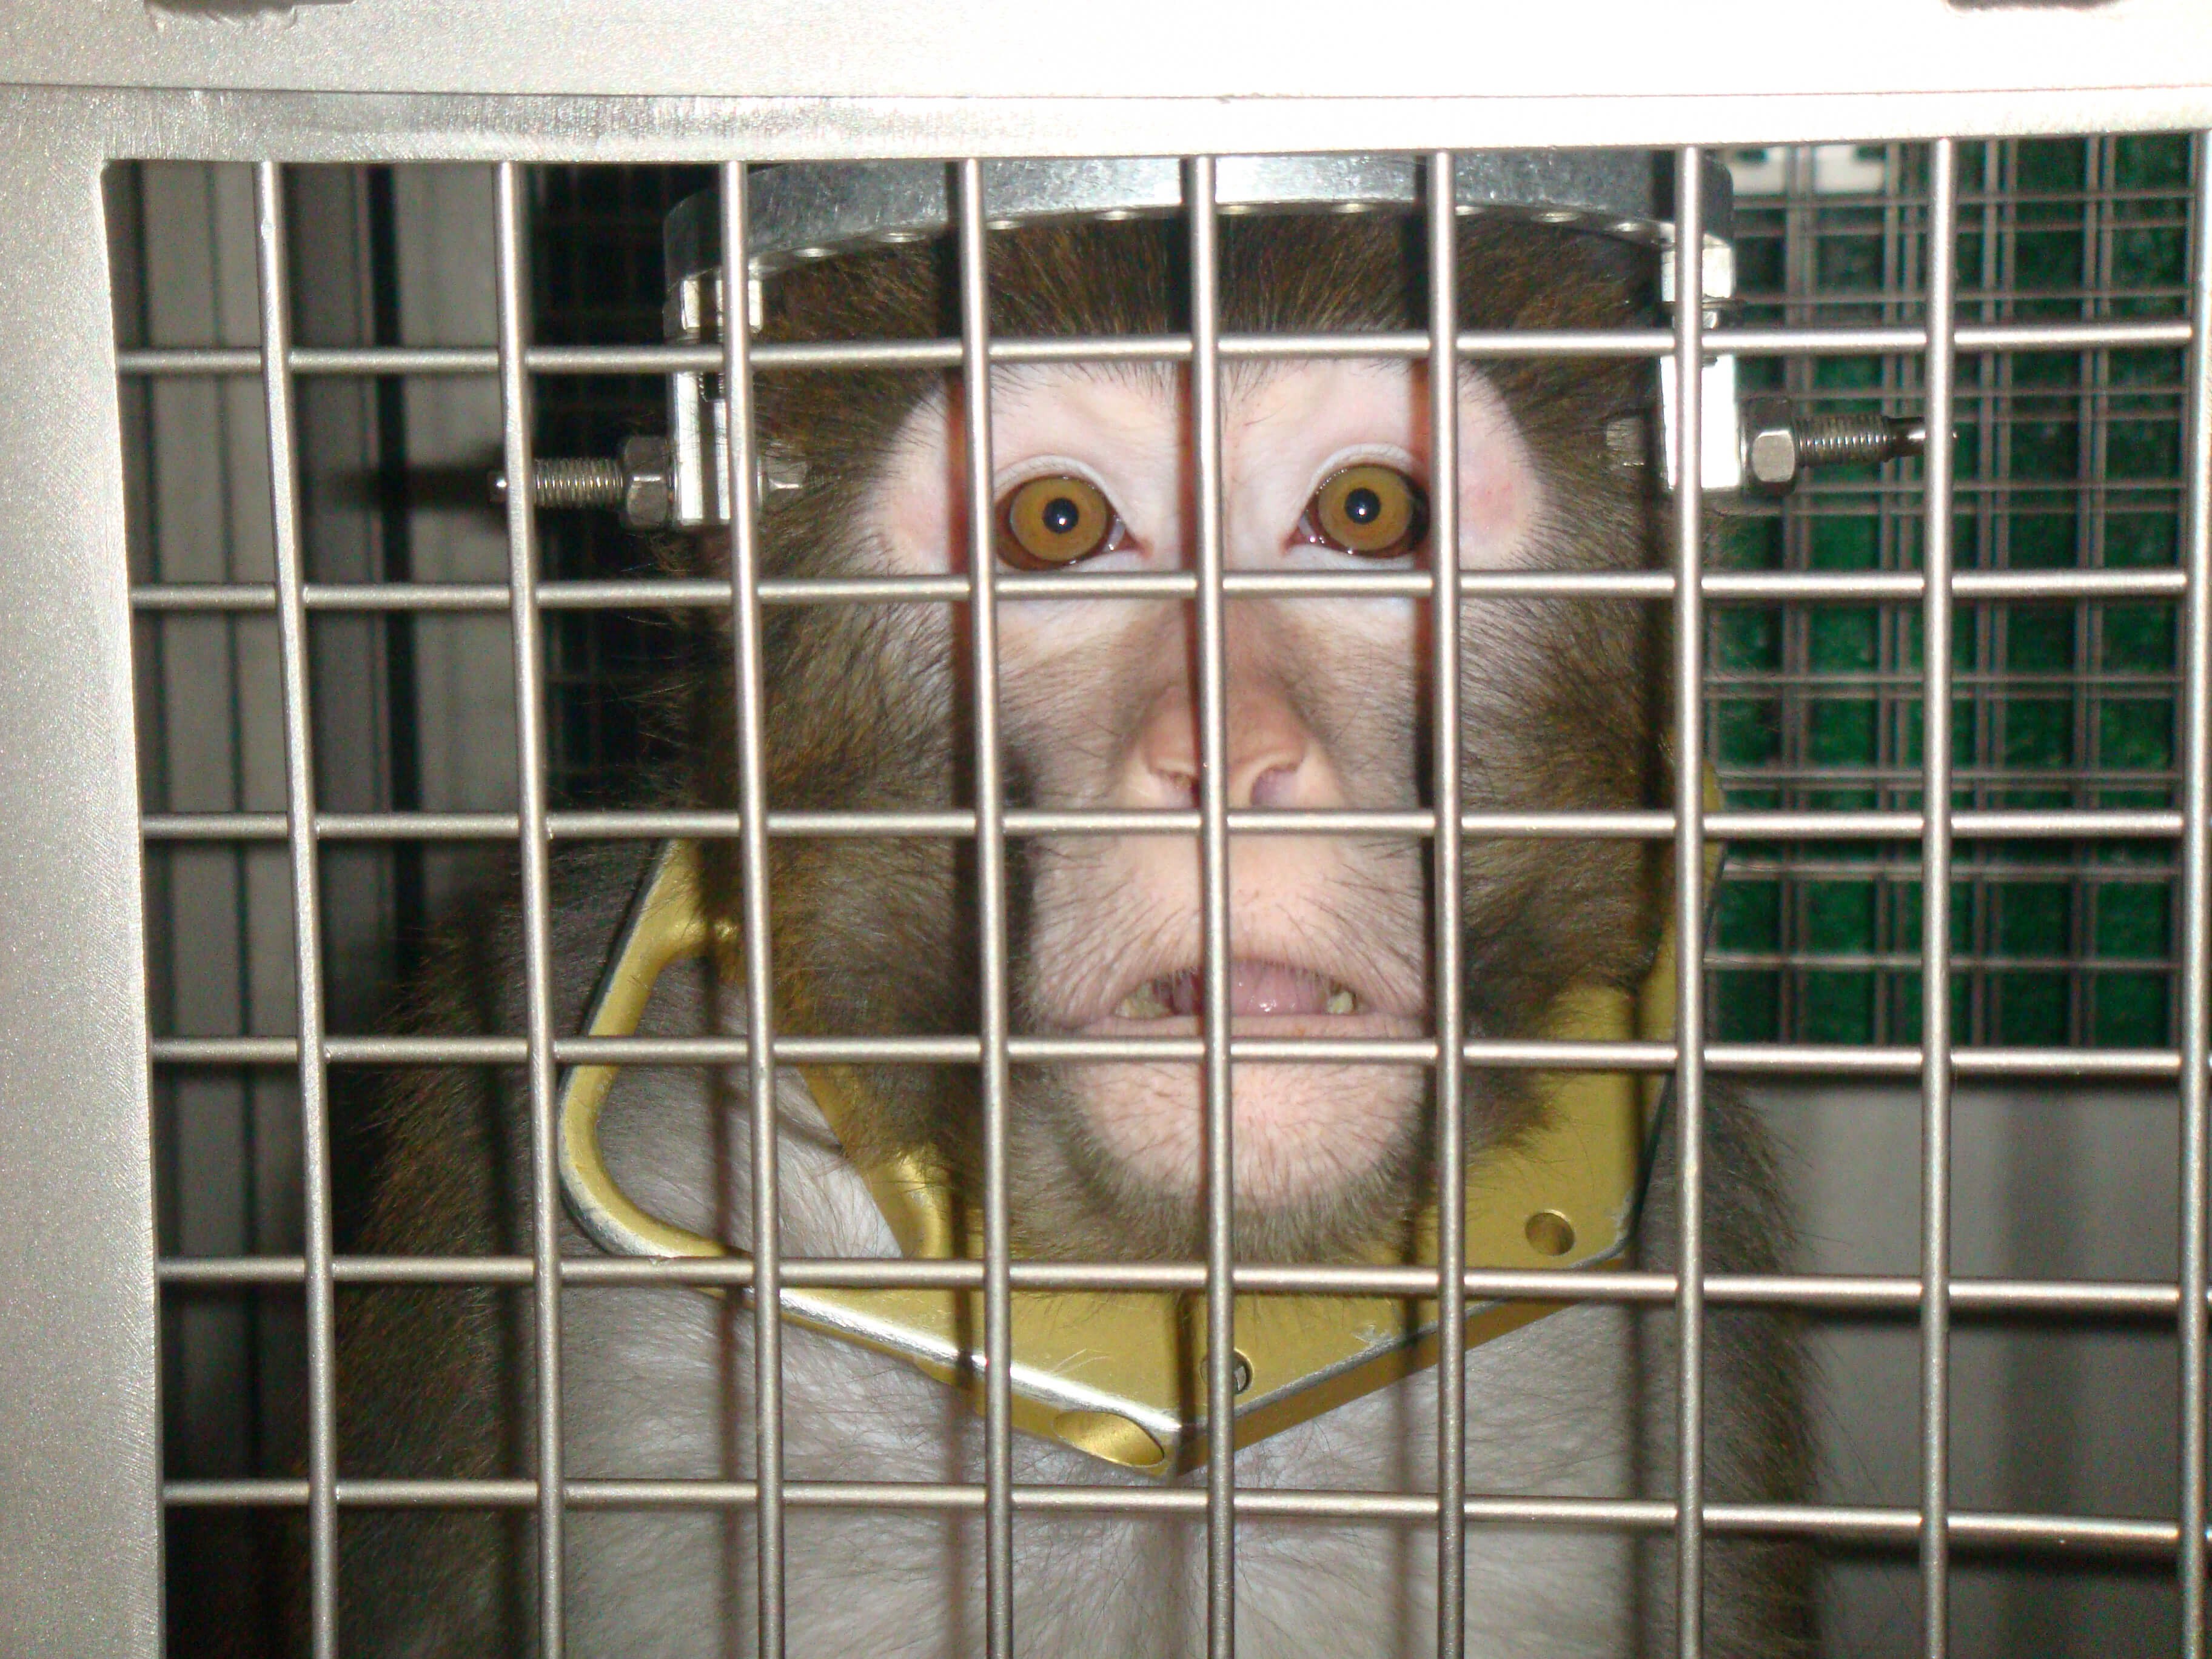 animal testing cruelty facts